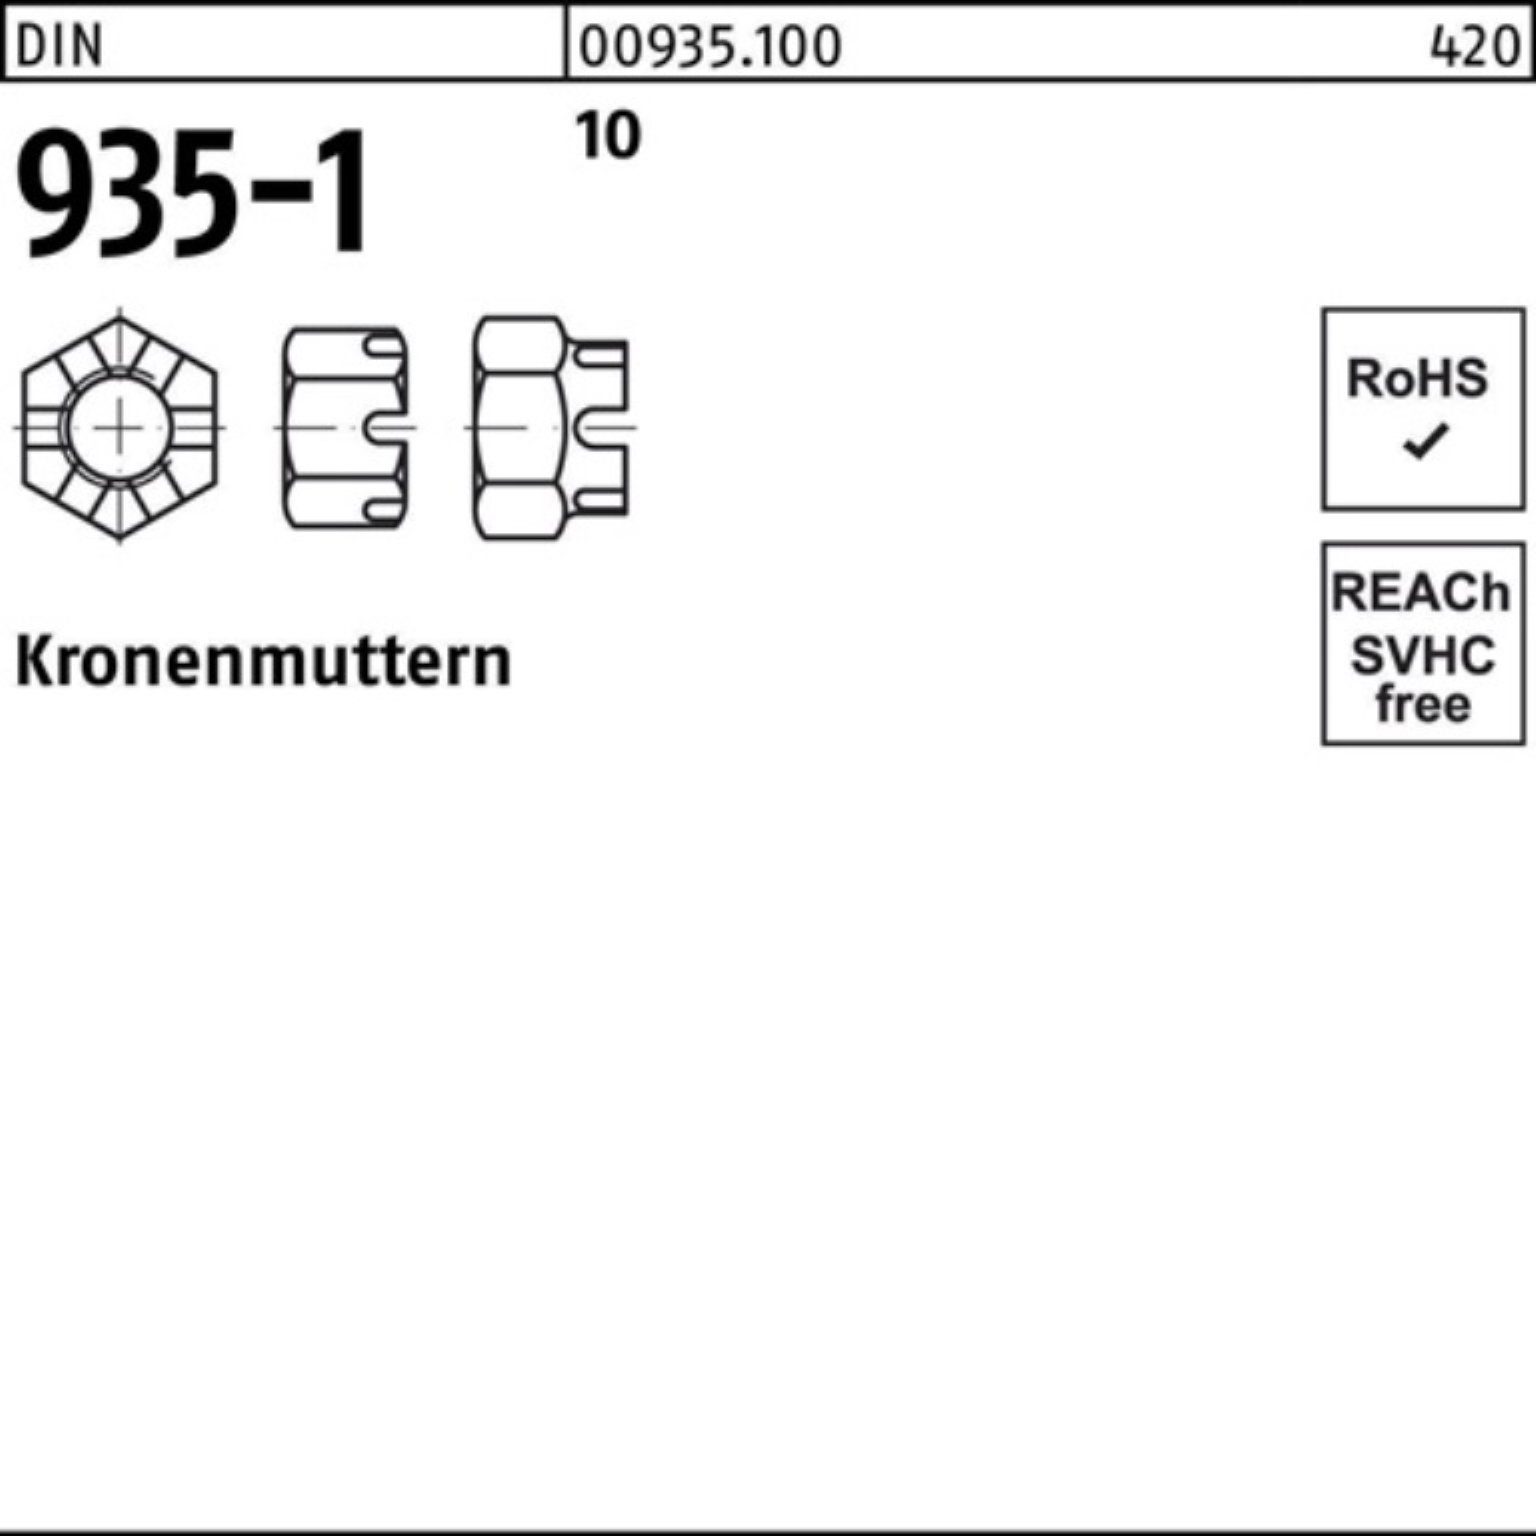 Reyher Kronenmutter 100er Pack Kronenmutter DIN 935-1 M20 10 25 Stück DIN 935-1 10 Kronen